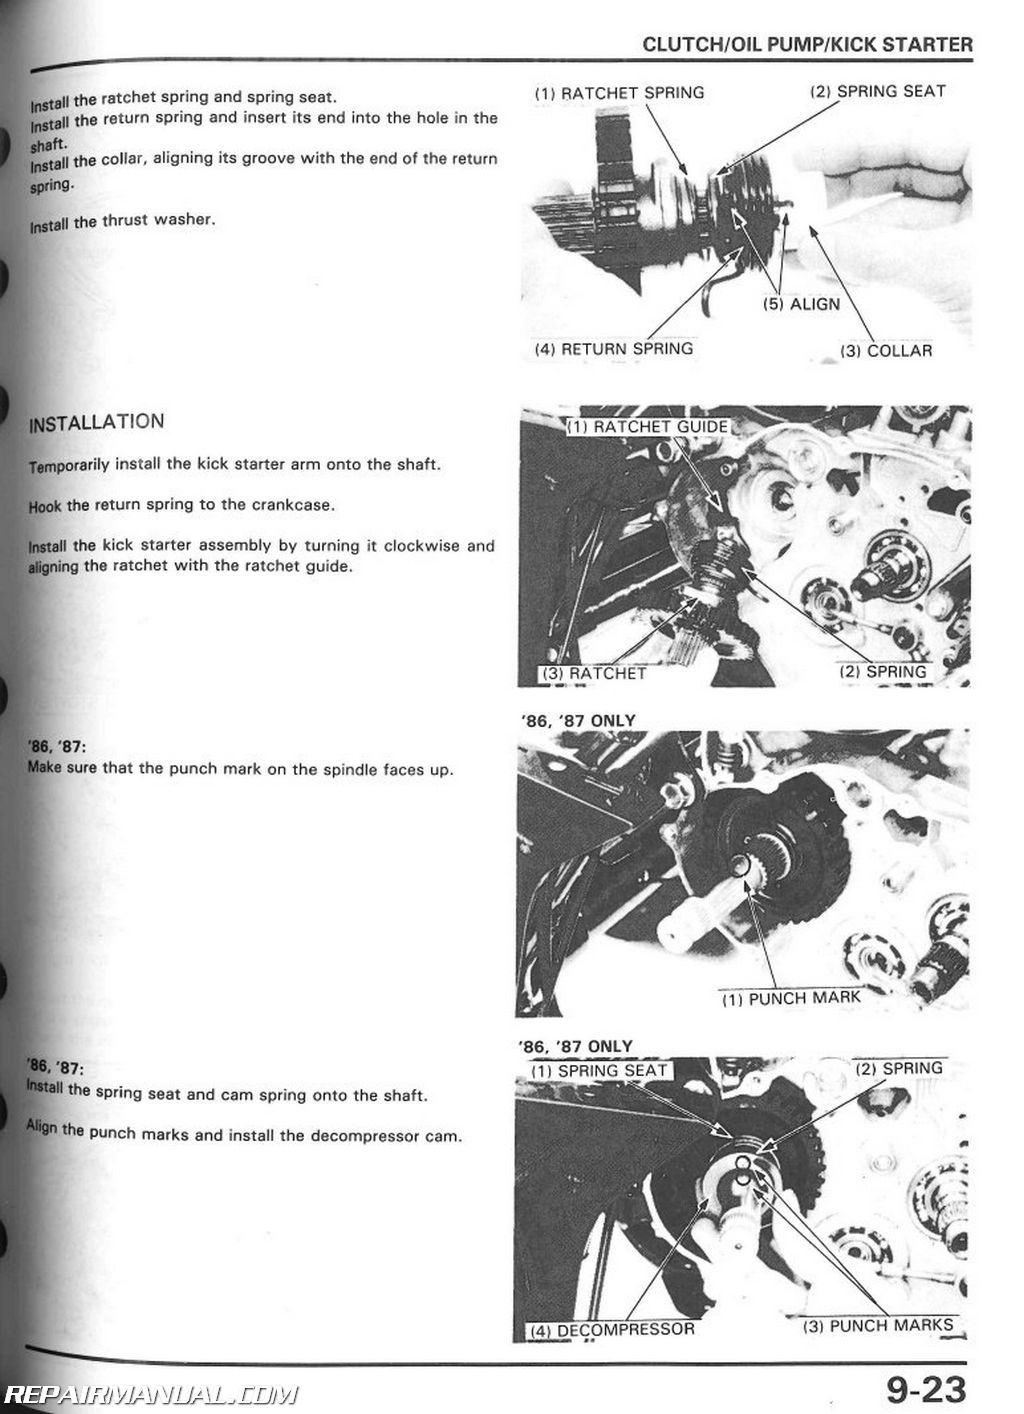 1986 Honda 350 fourtrax service manual #2